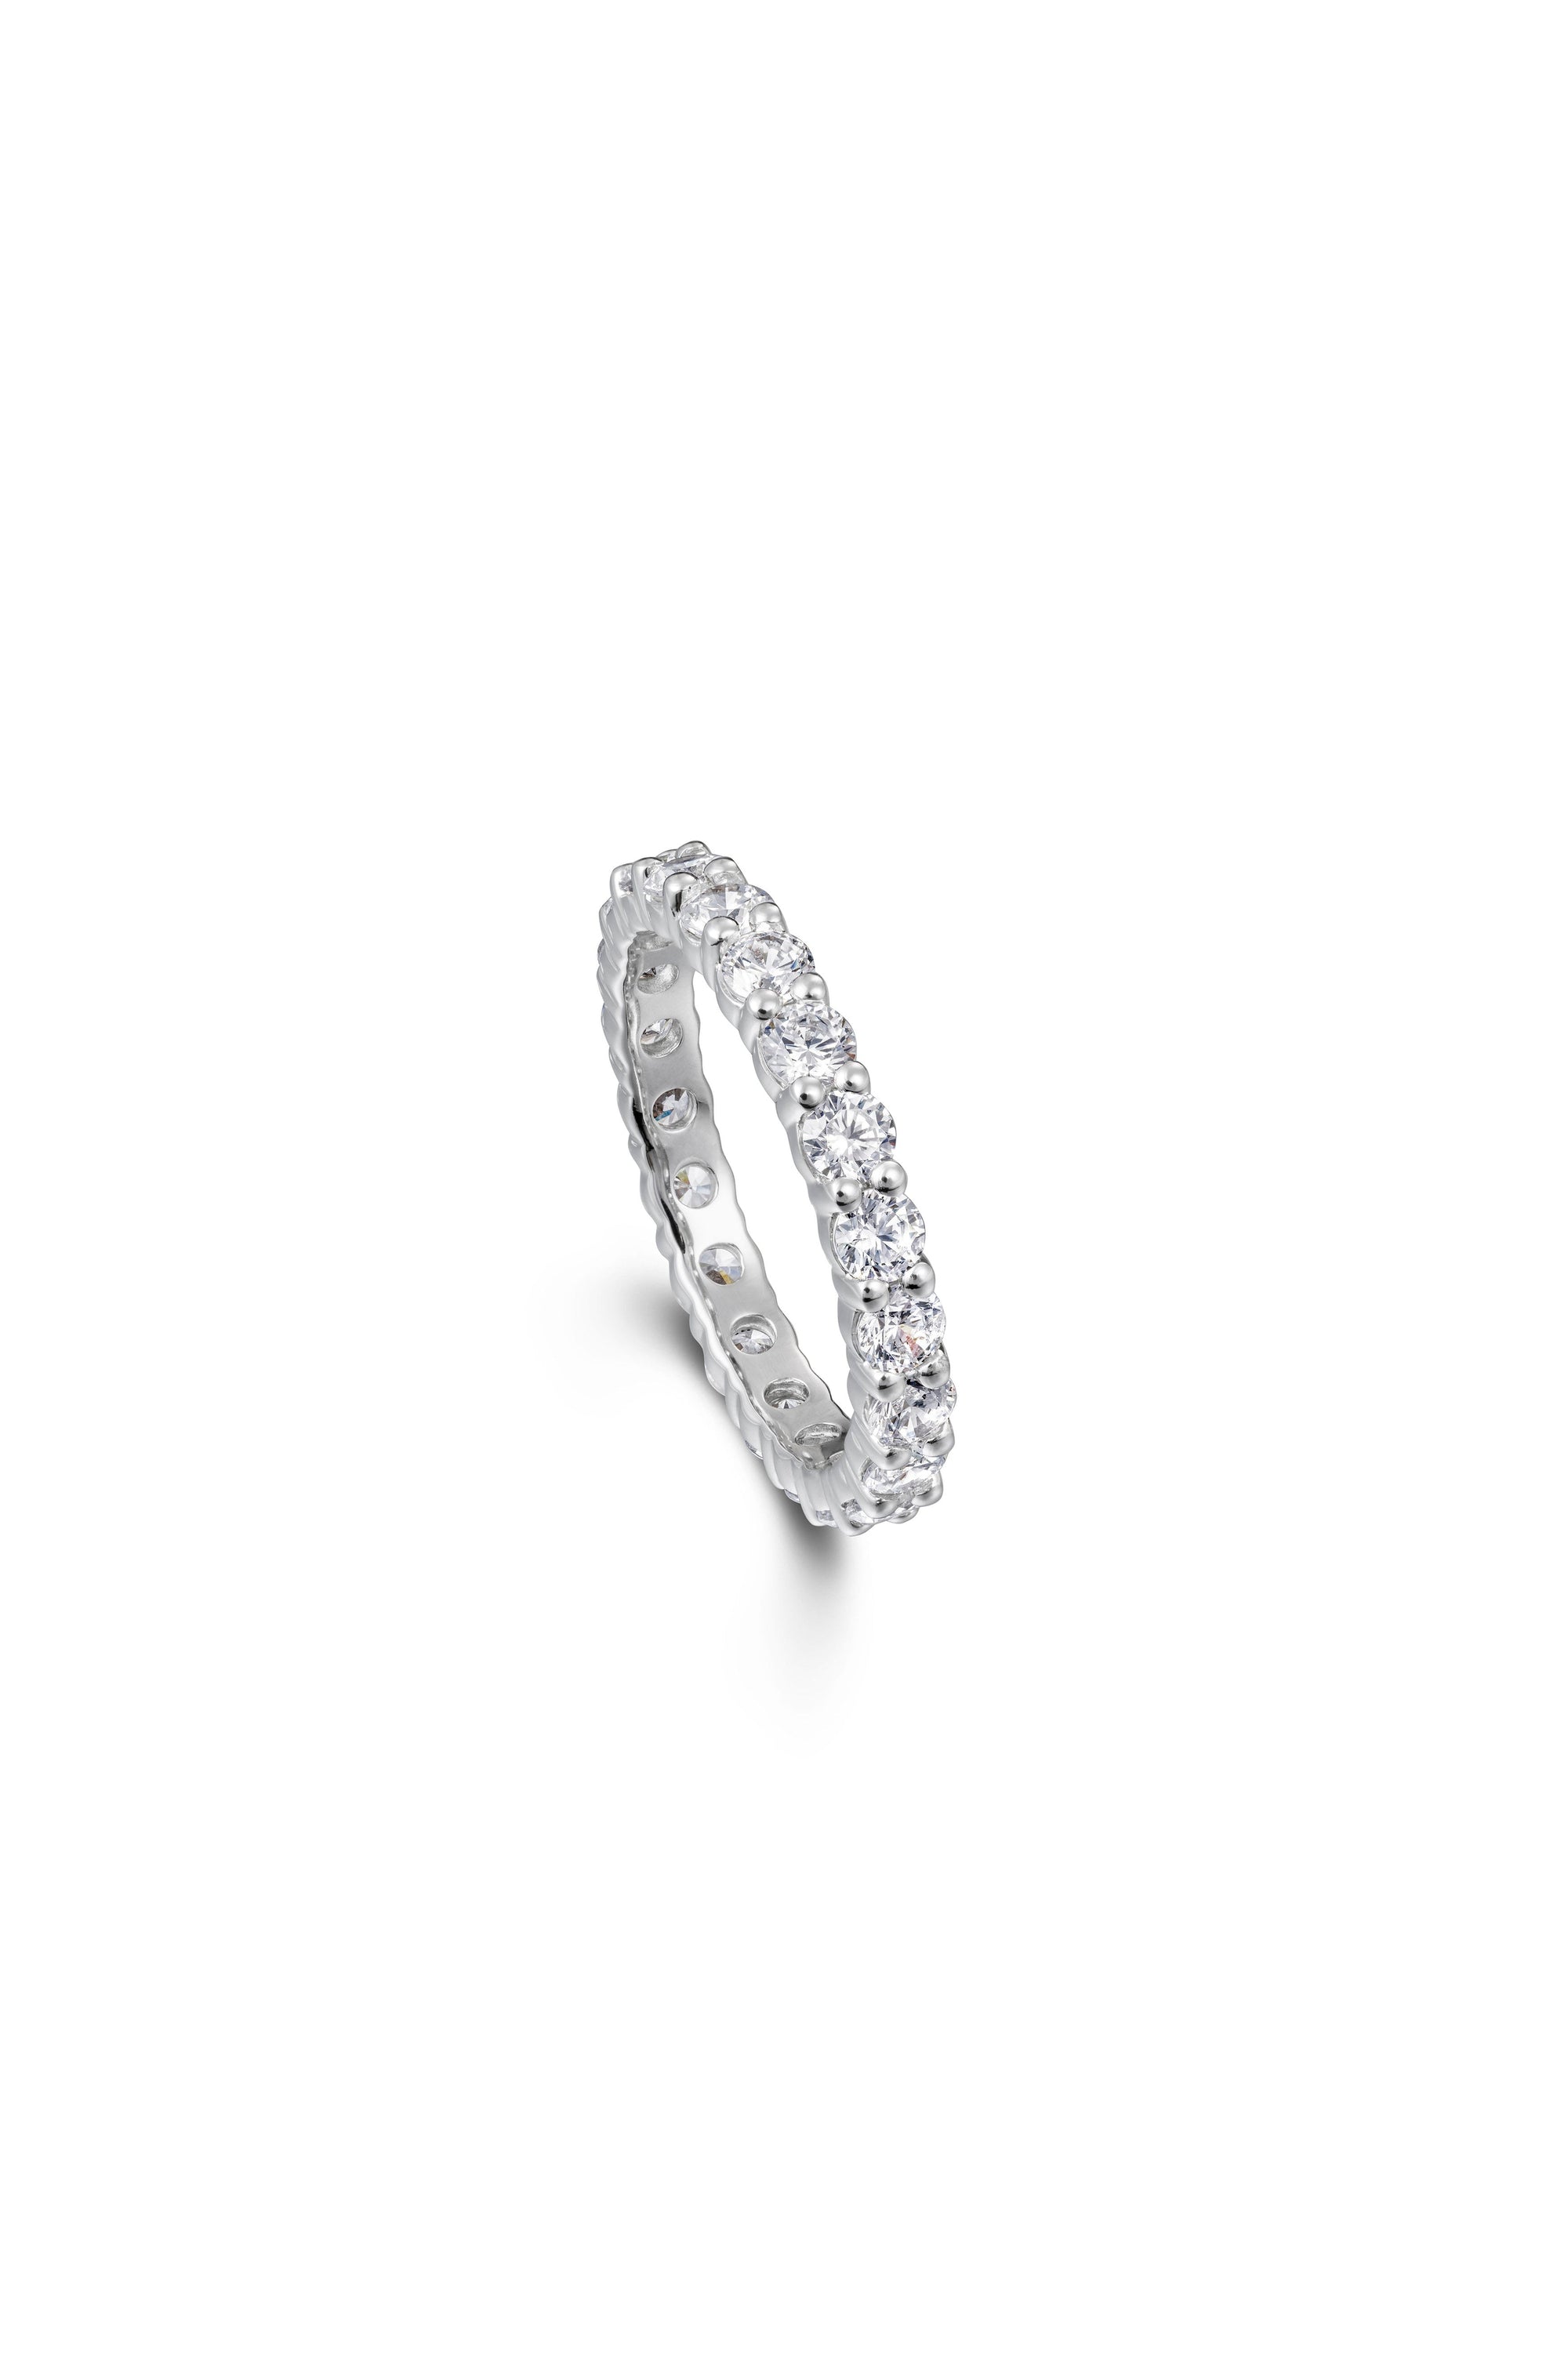 Full Eternity Ring with 2.3ct natural white diamonds-The Diamond Setter